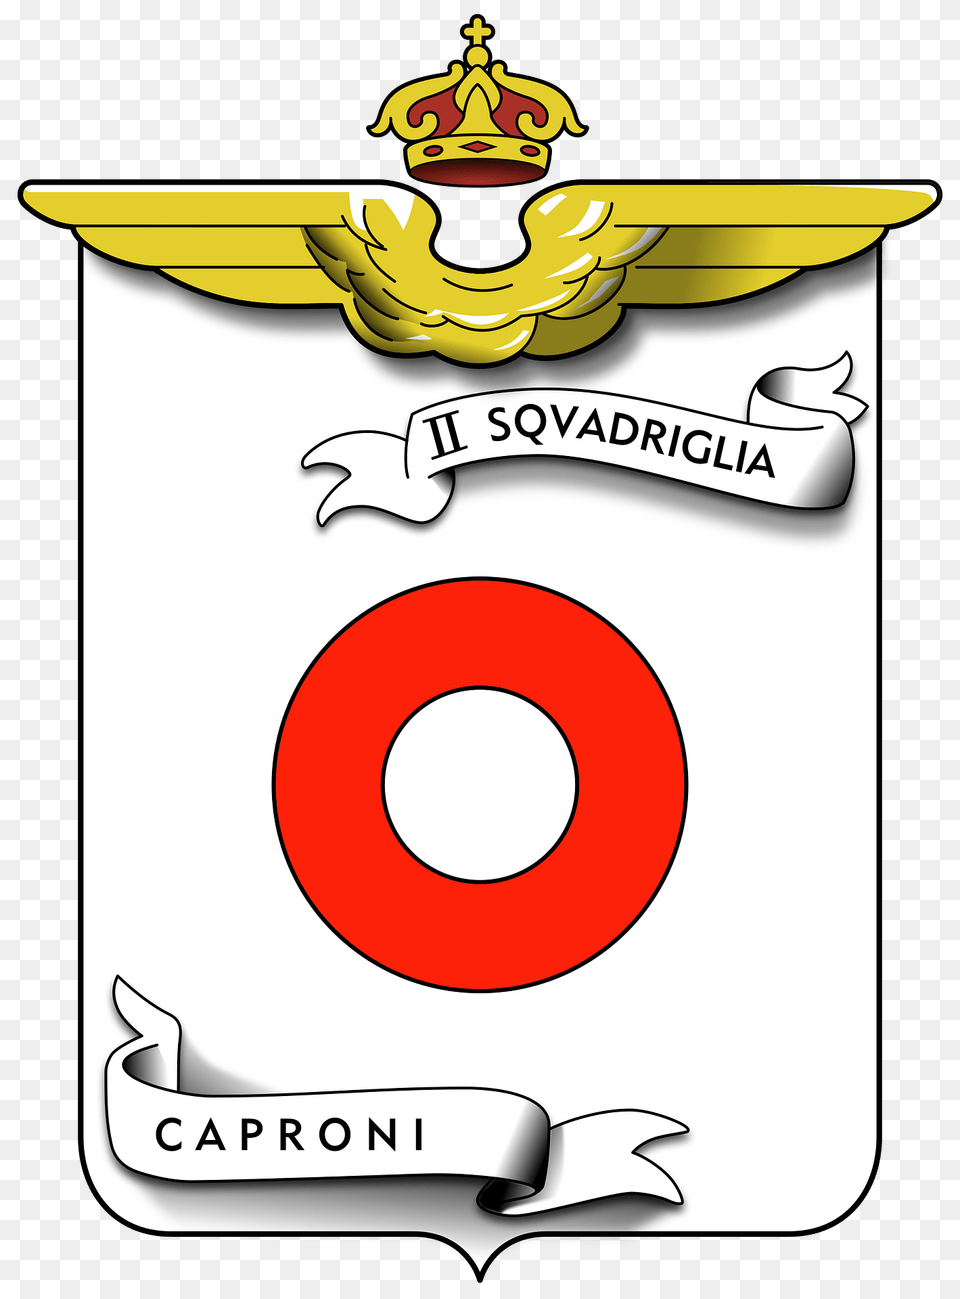 Coa Ii Squadriglia Caproni Clipart, Logo, Symbol, Text, Smoke Pipe Png Image